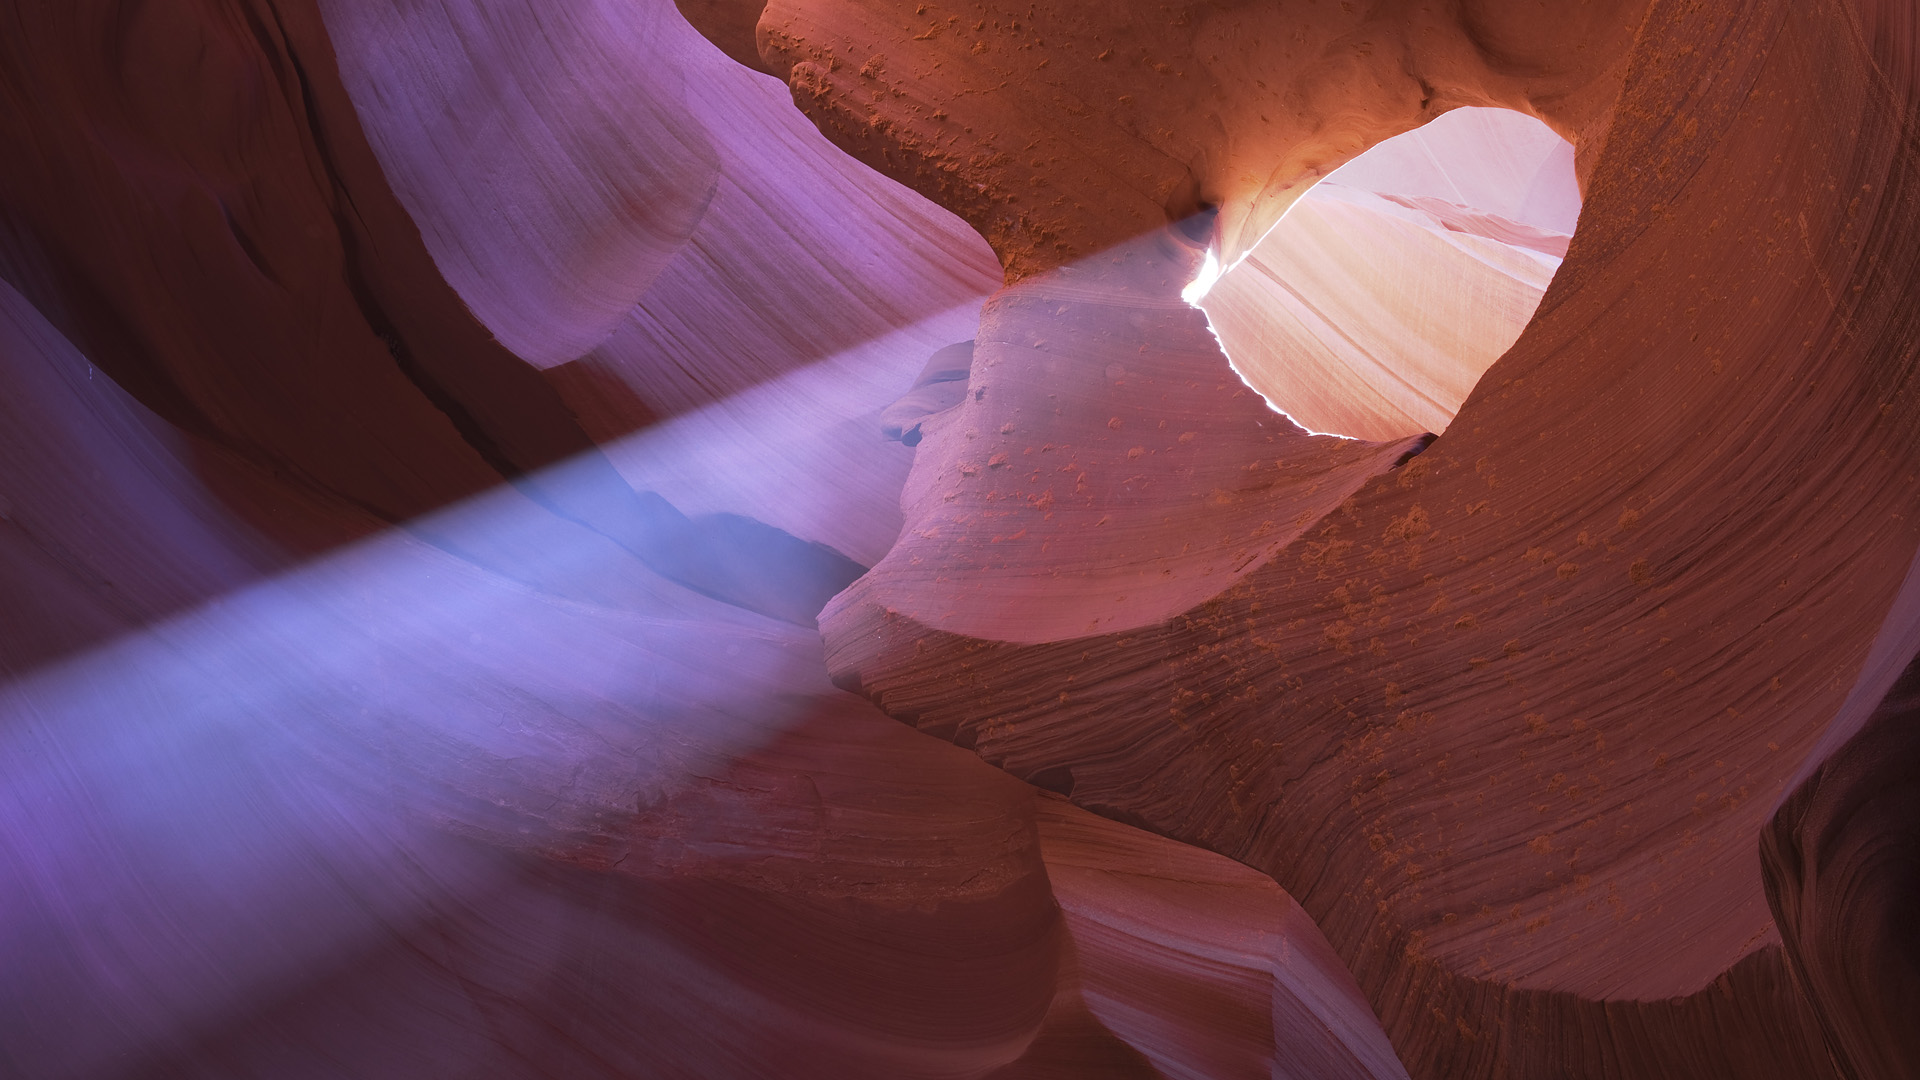 Nature Antelope Canyon HD Wallpaper | Background Image